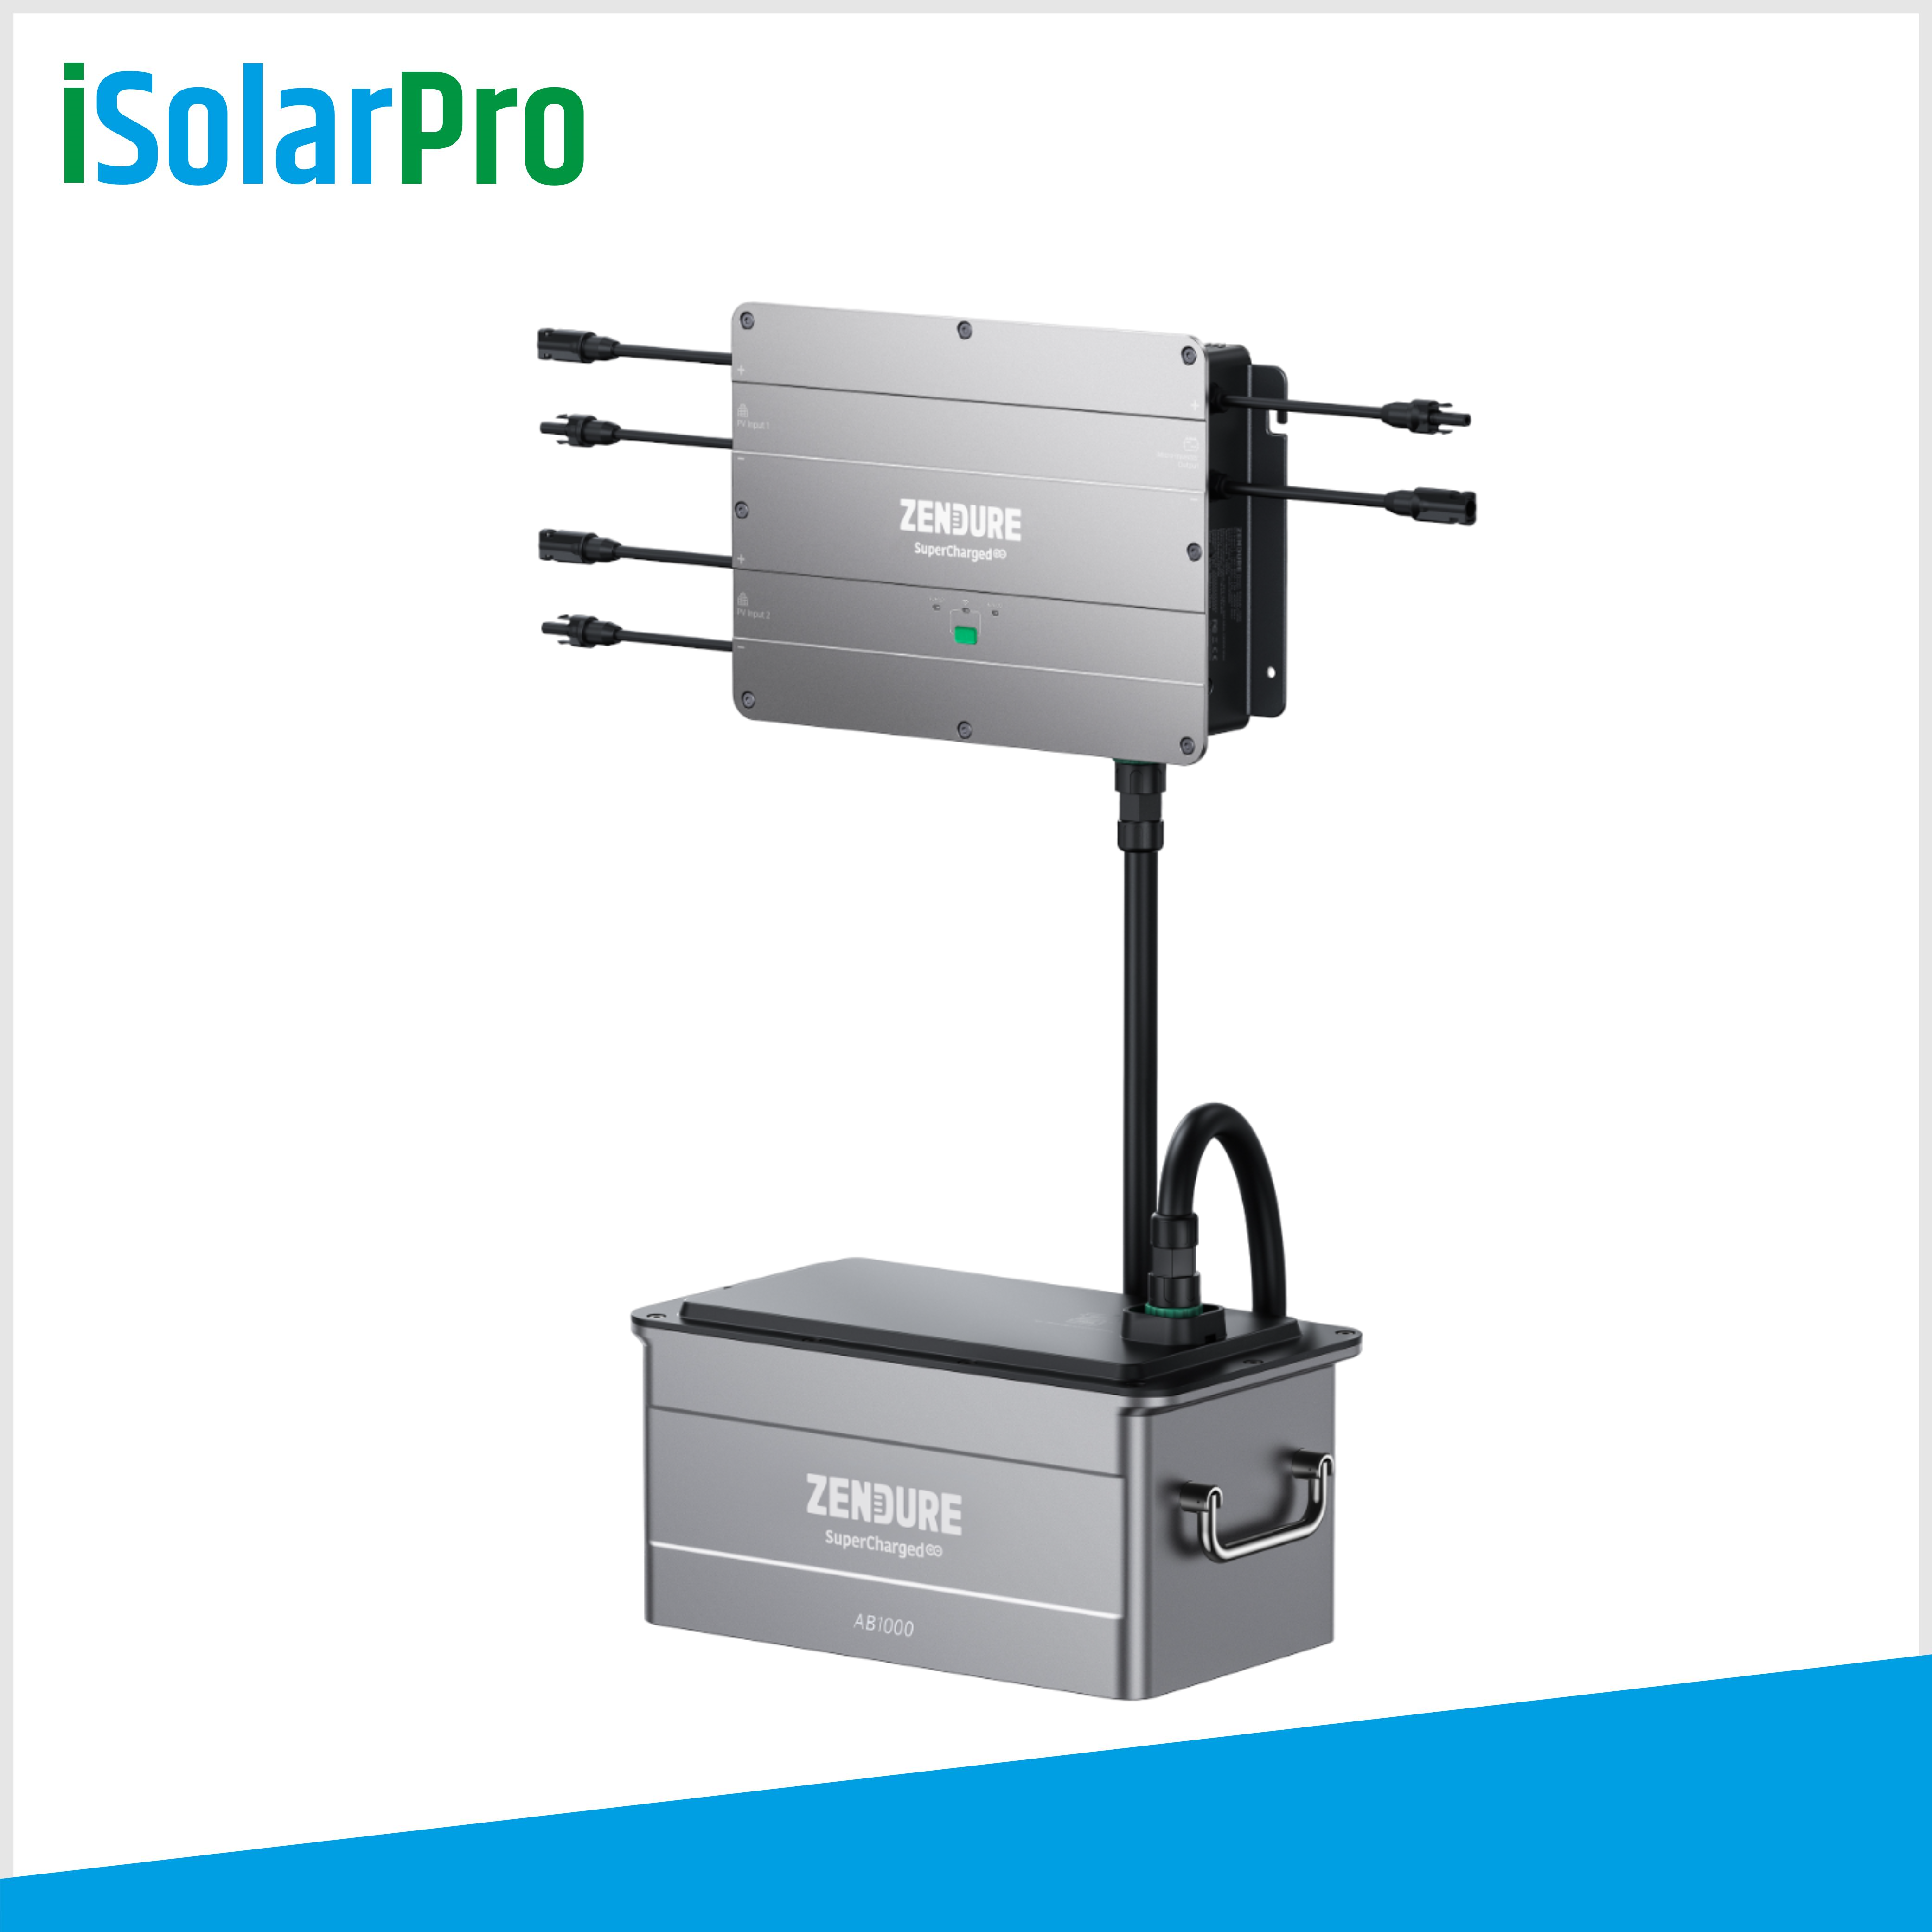 Zendure Energiespeicher SolarFlow 3840 Wh Kit PV Hub mit 4x